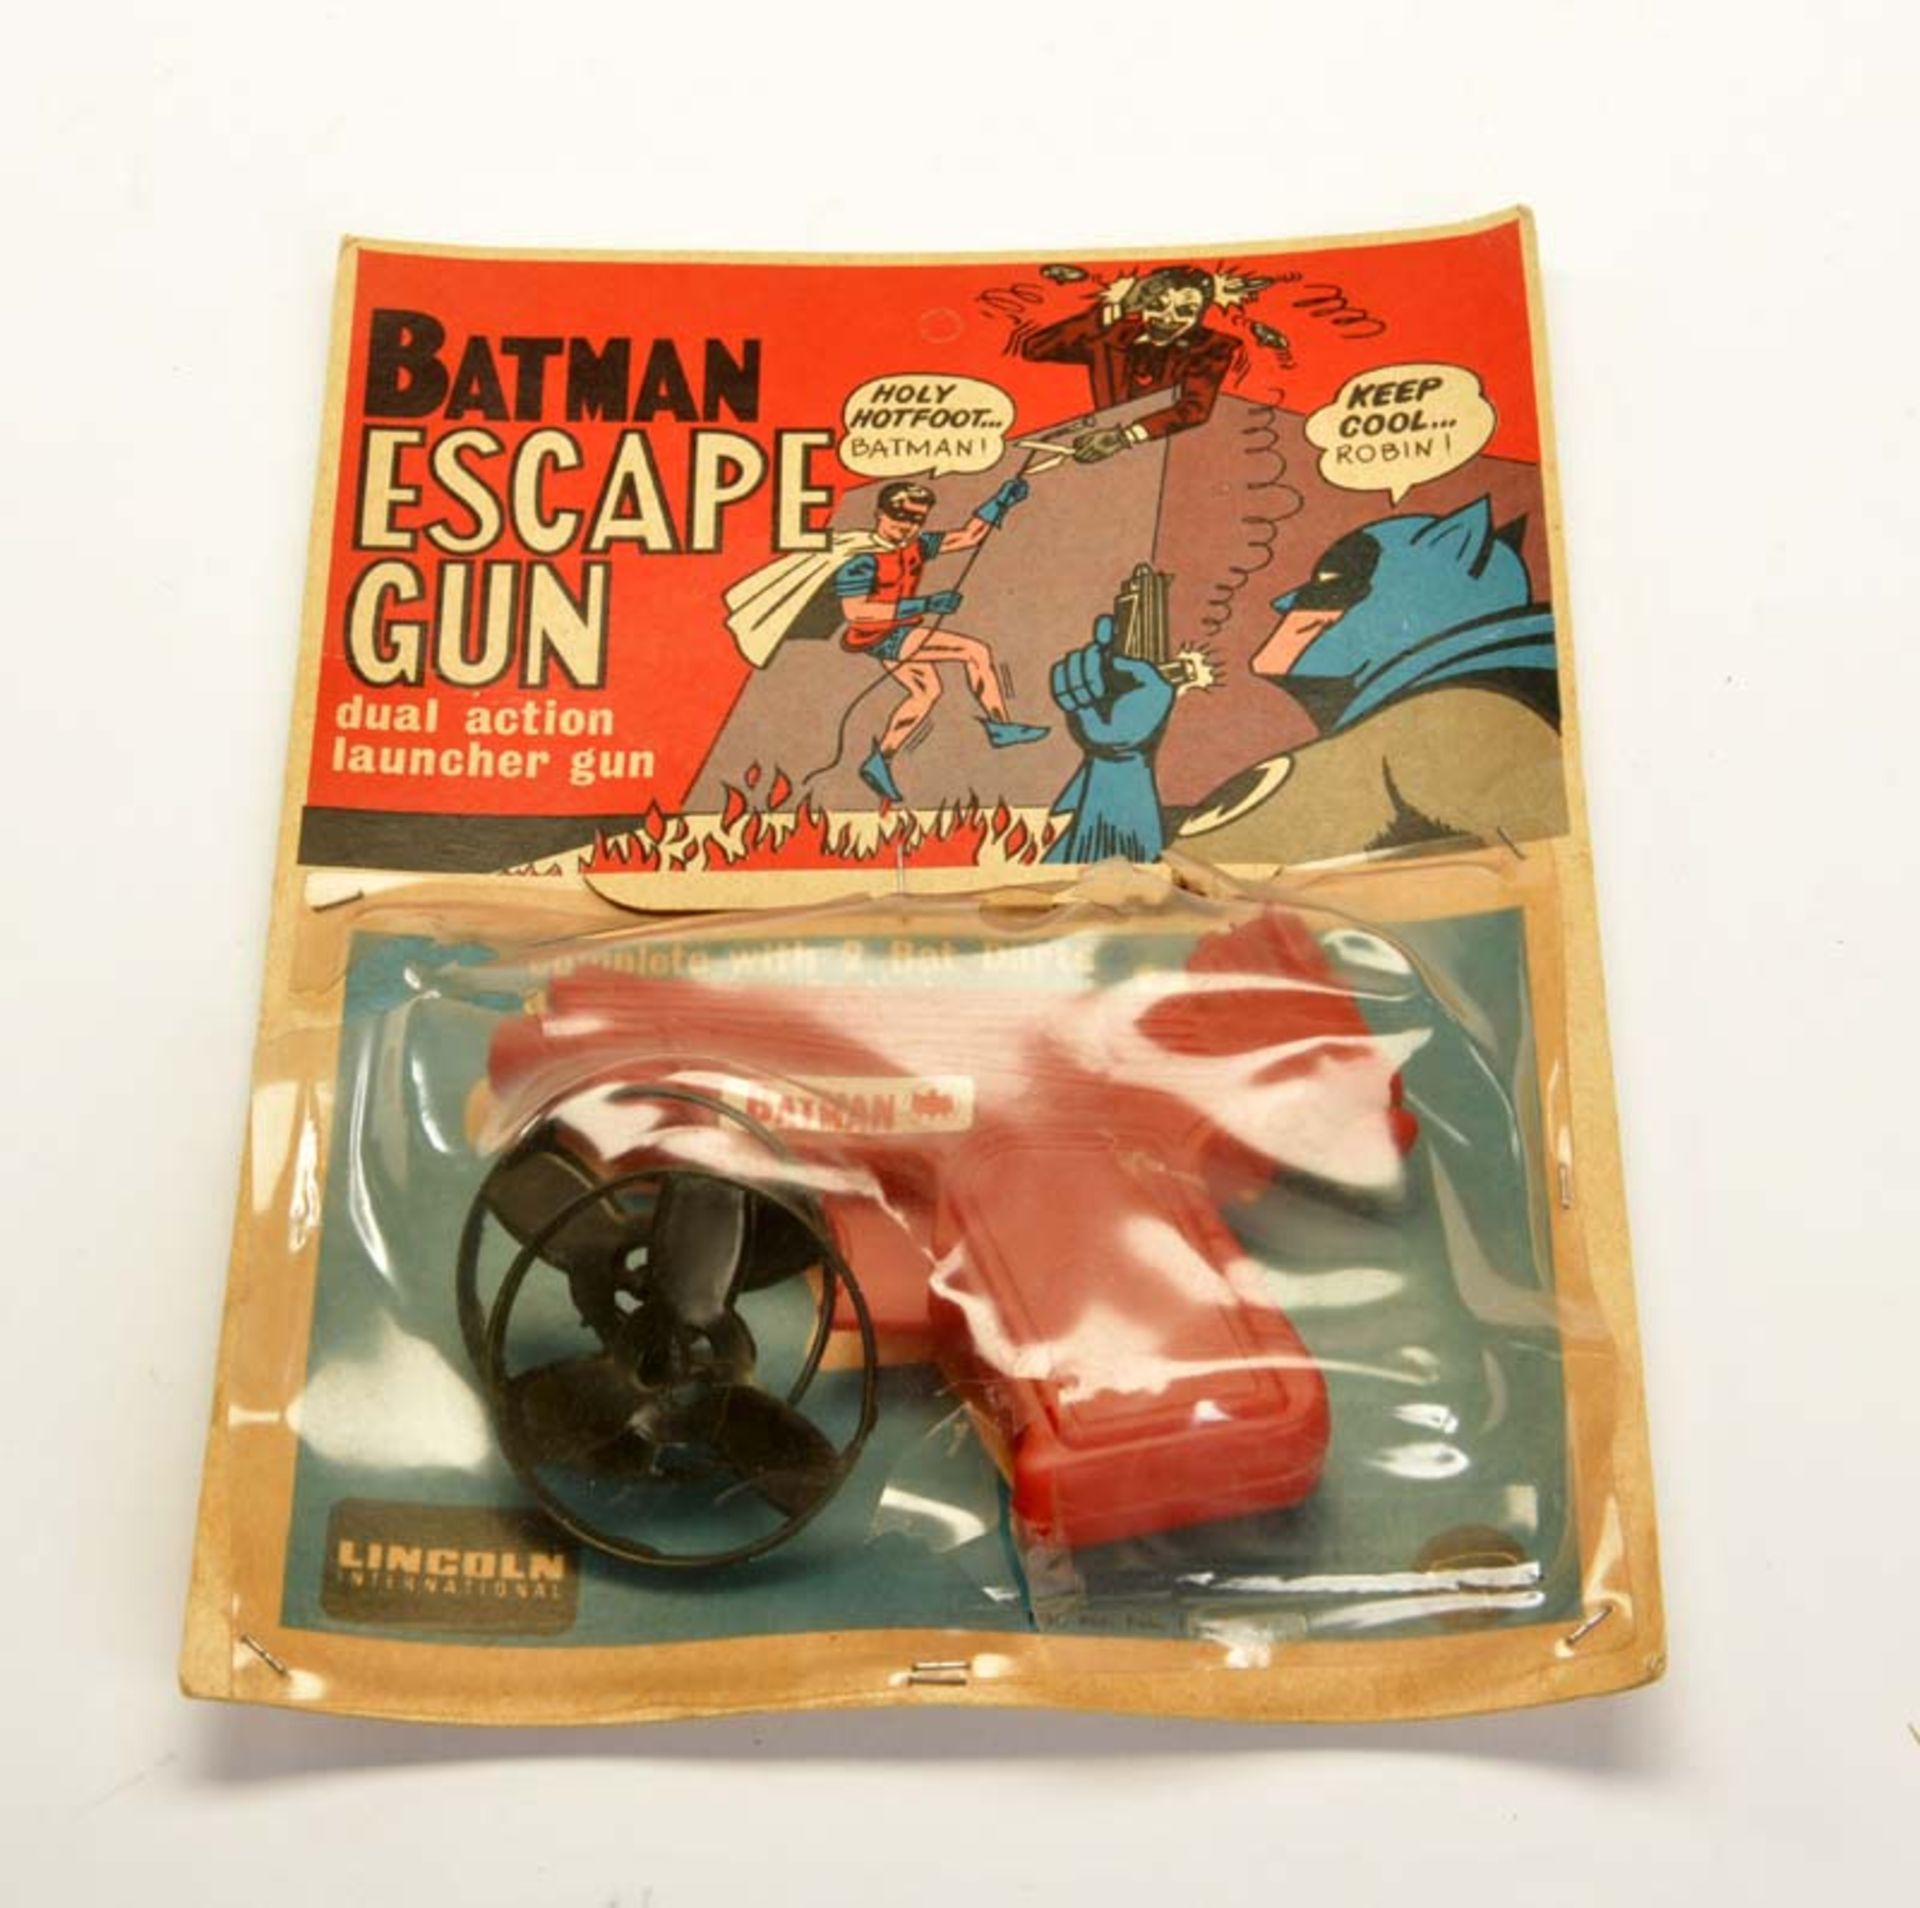 Lincoln, Batman Escape Gun from 1966, plastic, blister foil damaged, C 1